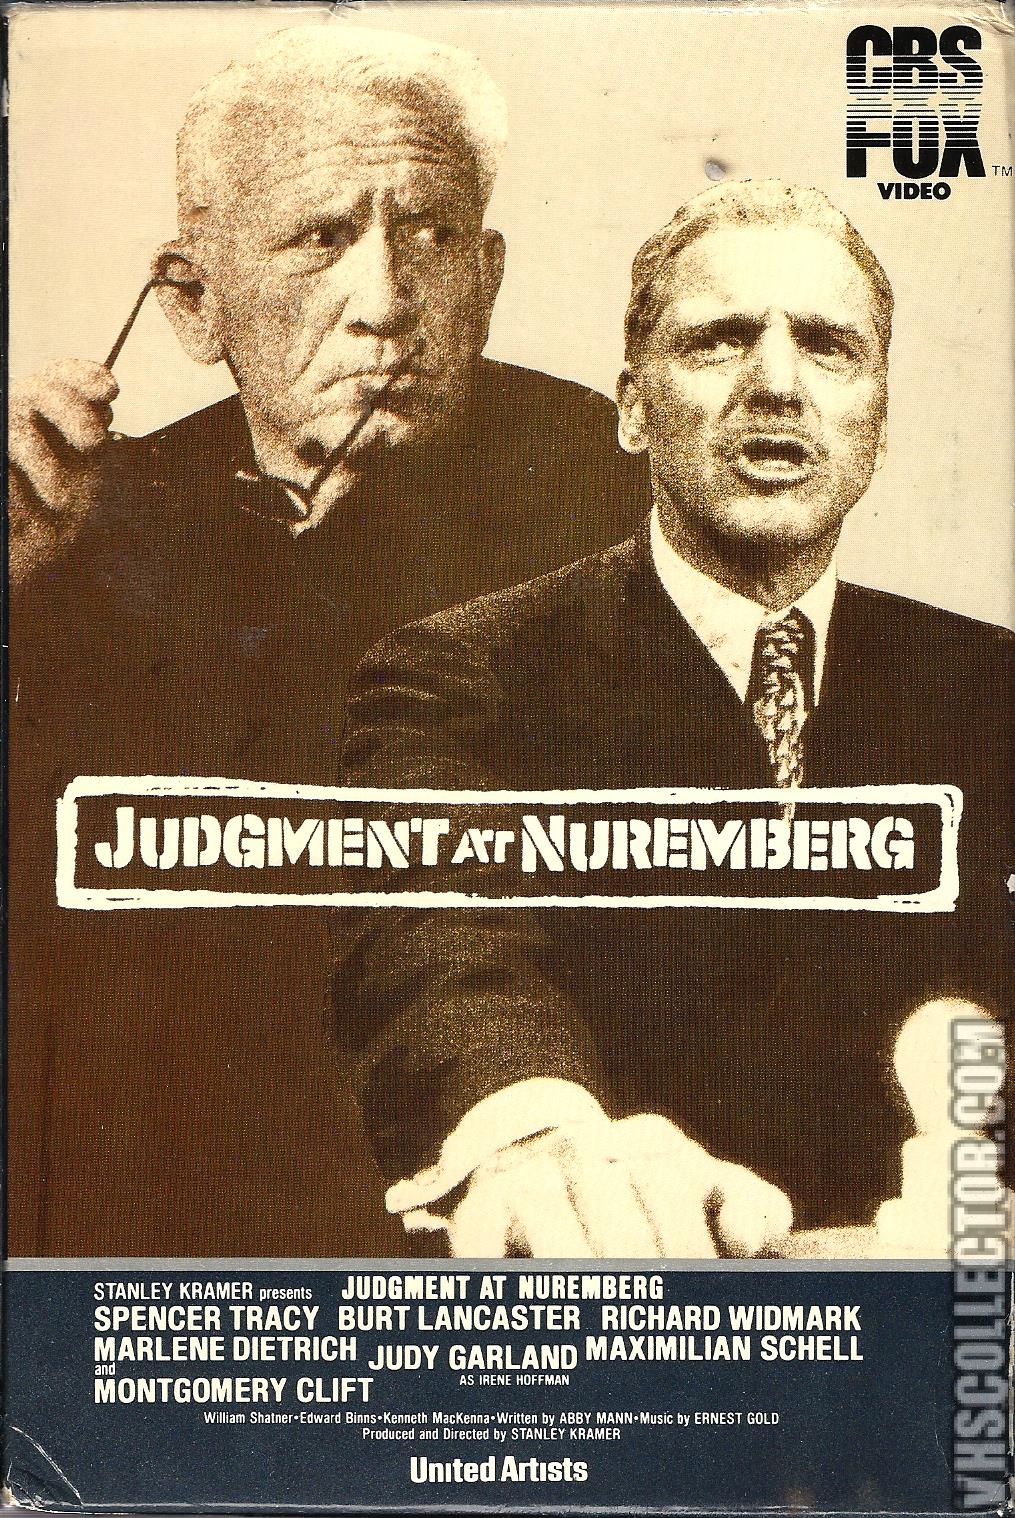 Maximilian Schell  Biography, Movies, Judgment at Nuremberg